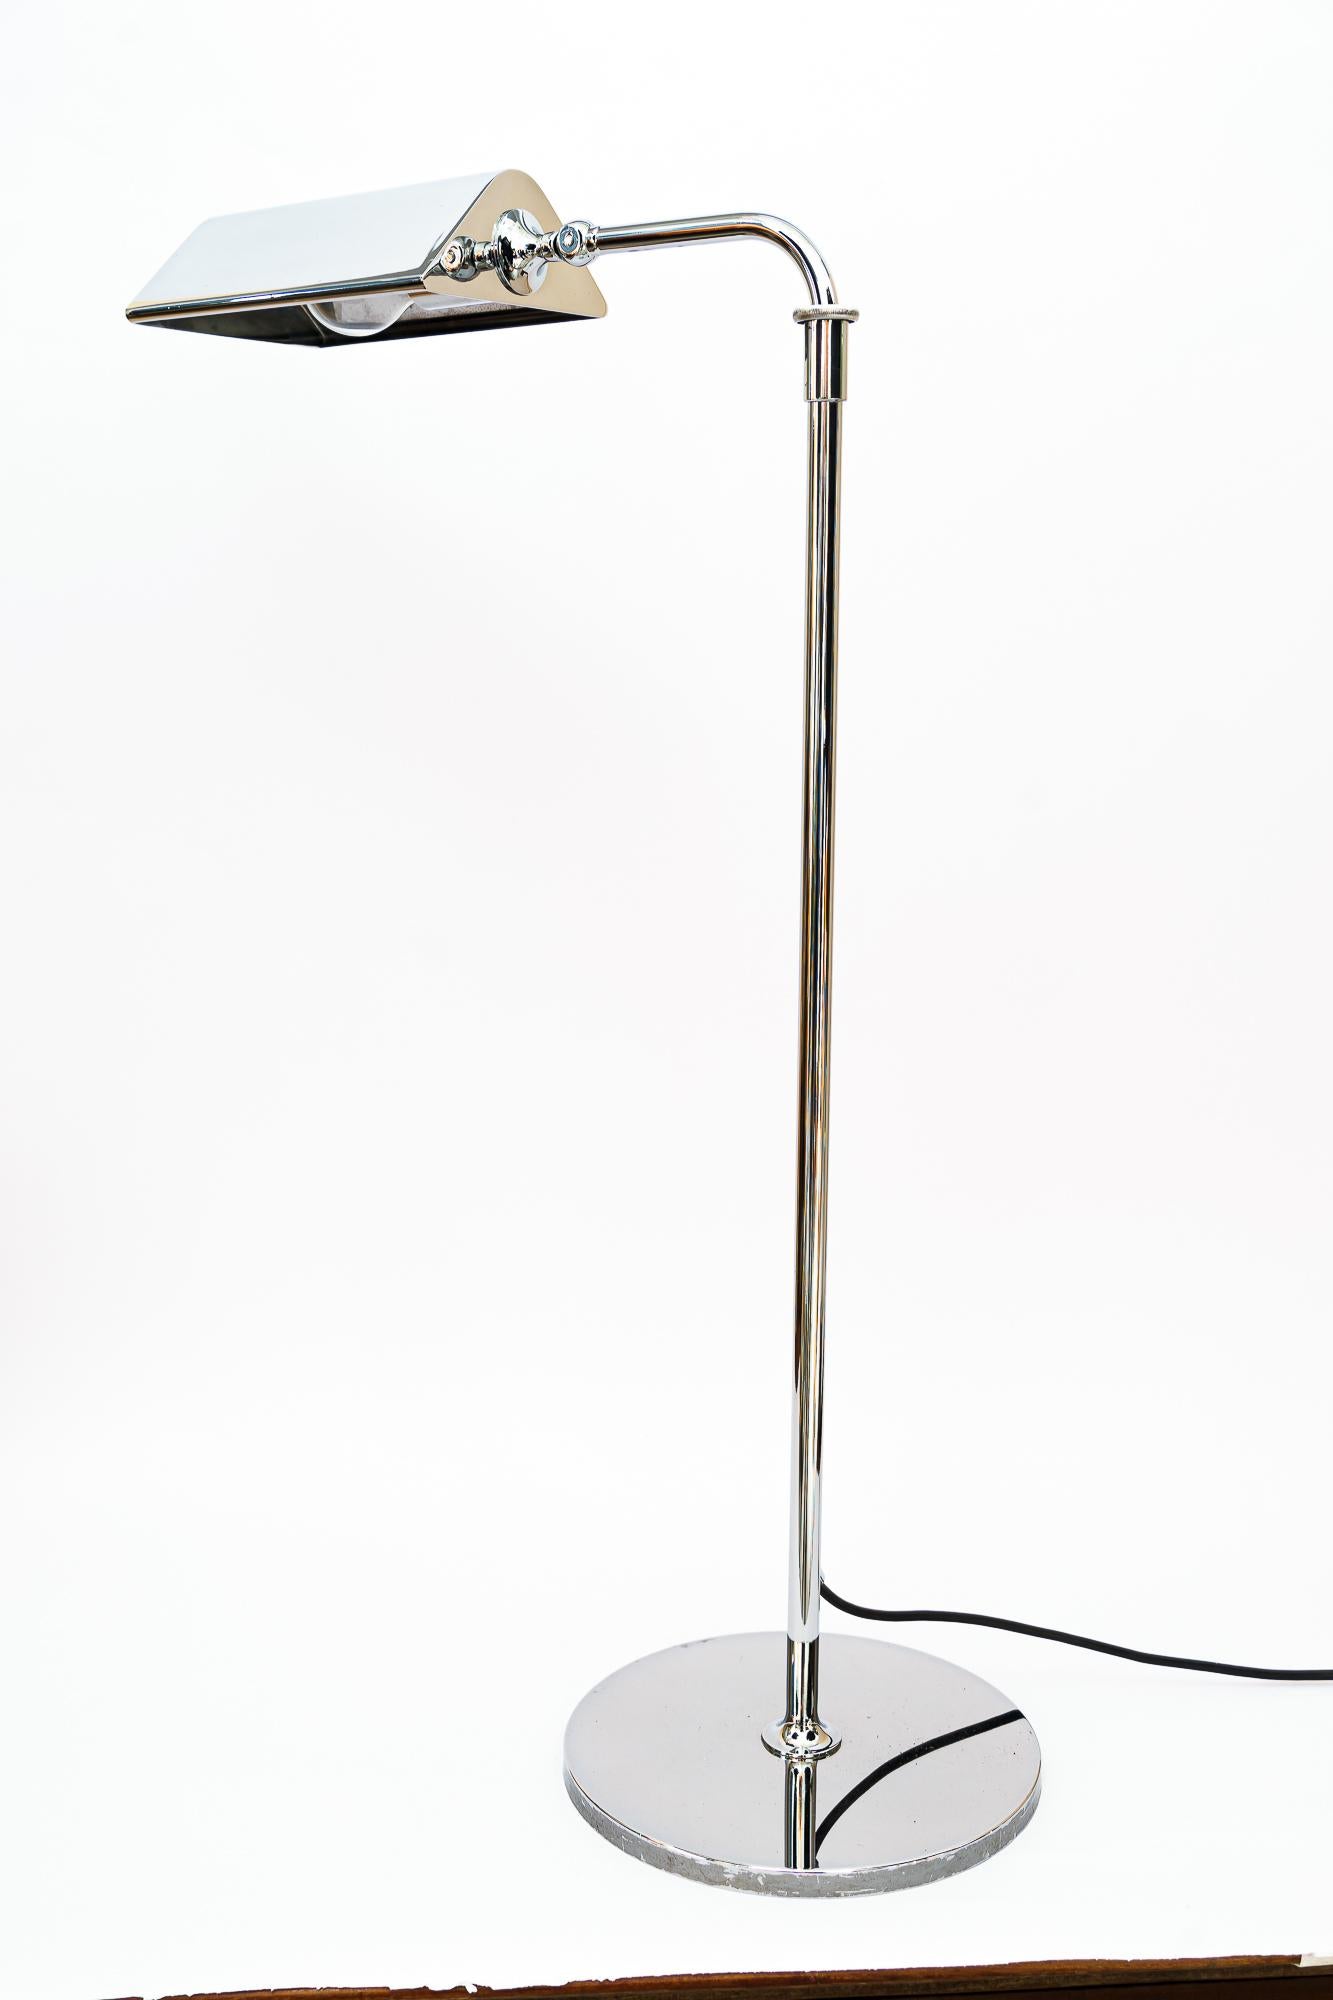 Adjustable nickel-plated floor lamp vienna around 1950s

Extendable floor lamp from 78cm up to 125cm
Original condition.